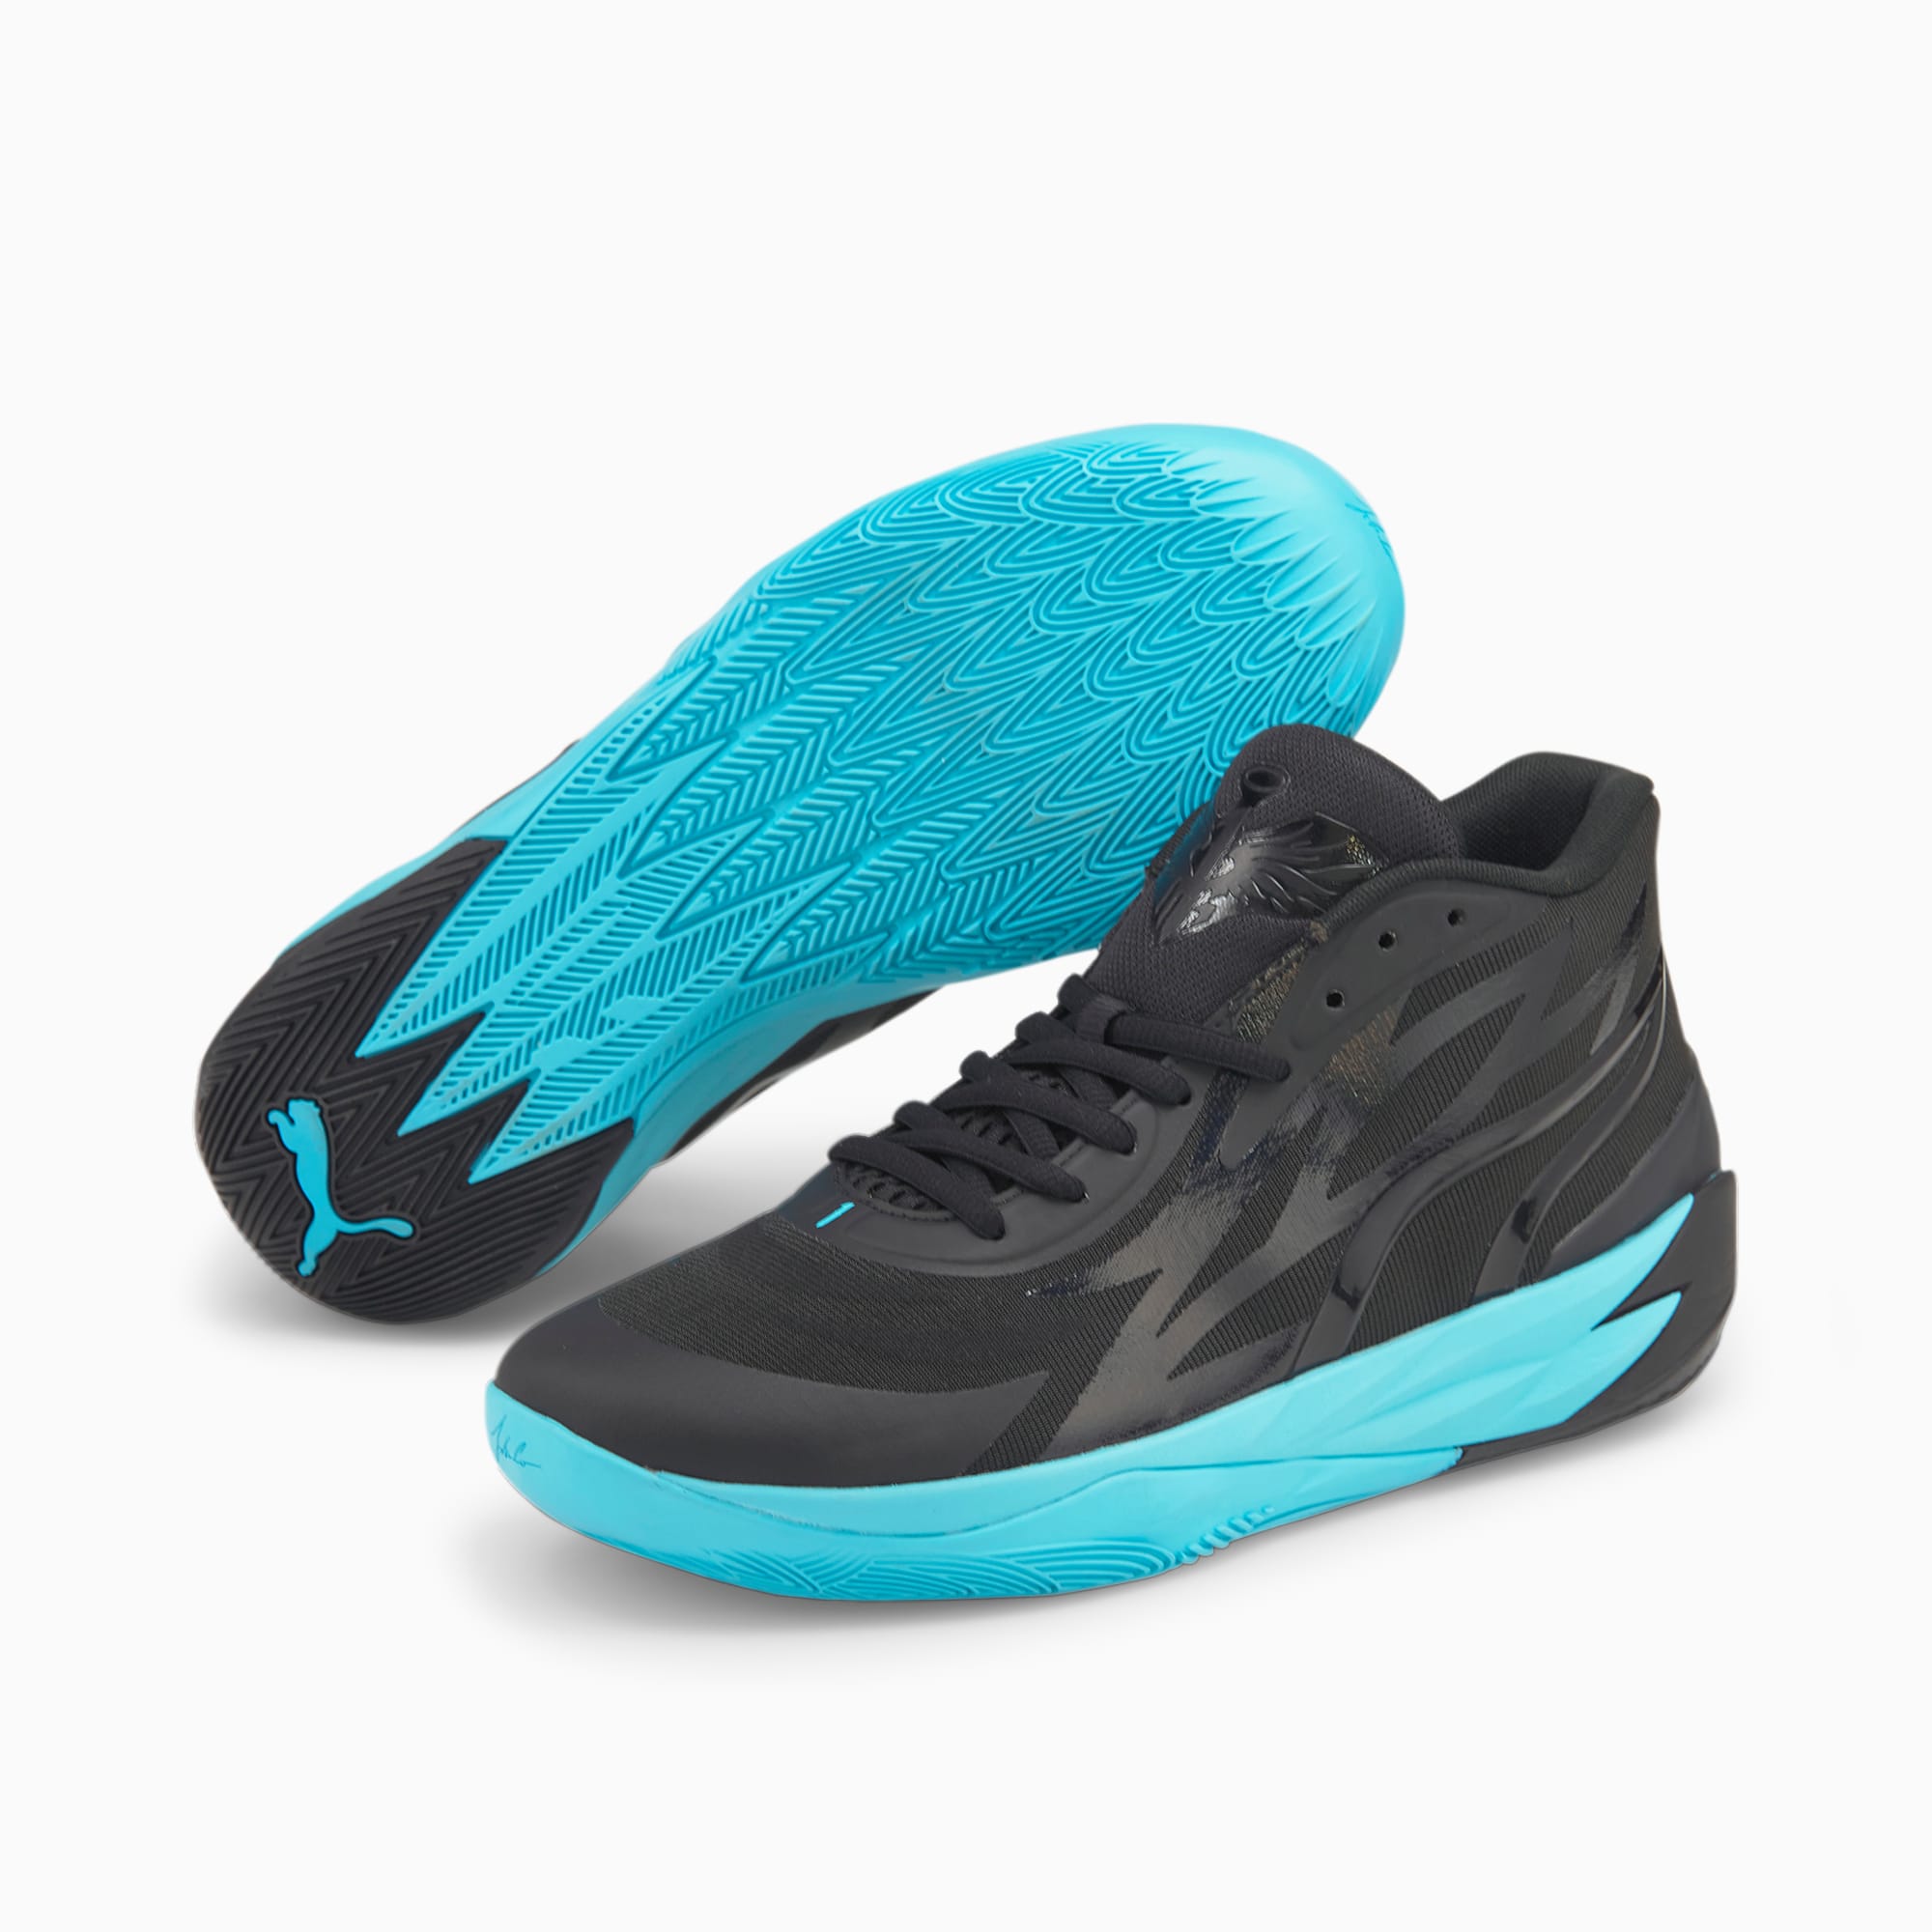 PUMA Chaussures De Basketball MB.02 Phenom Pour Homme, Noir/Bleu